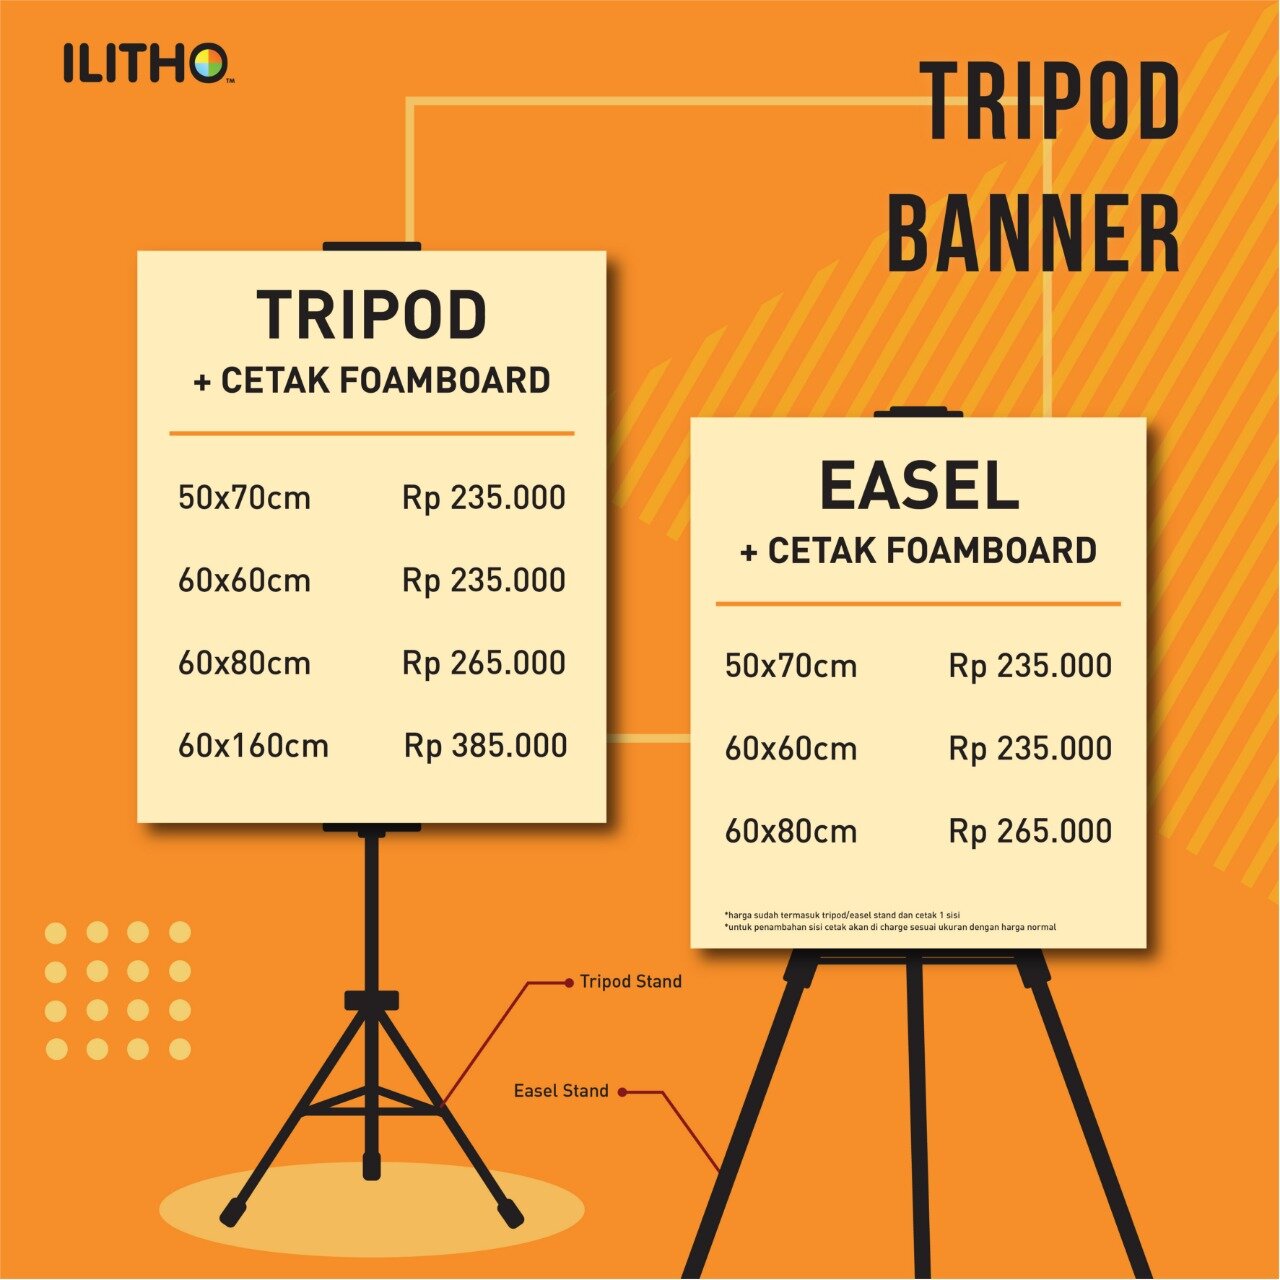 Manfaat Penggunaan Tripod Banner Sebagai Alat Promosi | ILITHO Blog